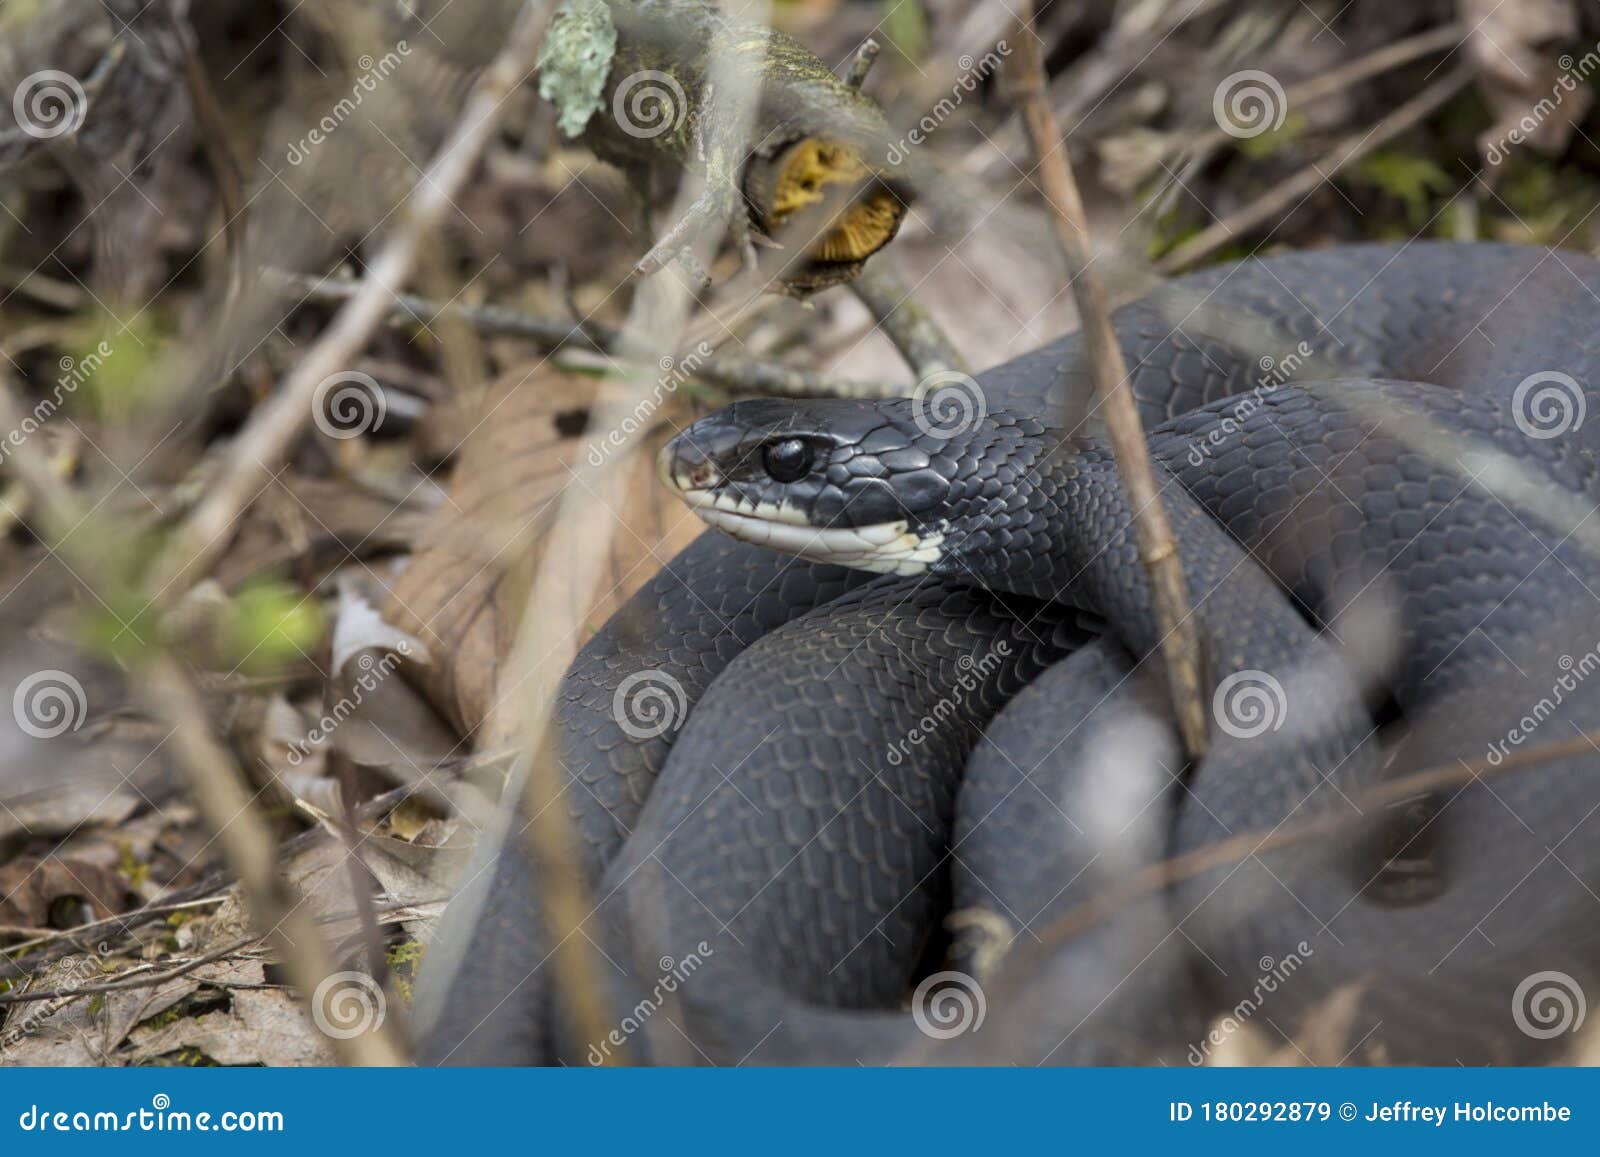 northern black racer snake in bushes at dividend falls, connecticut